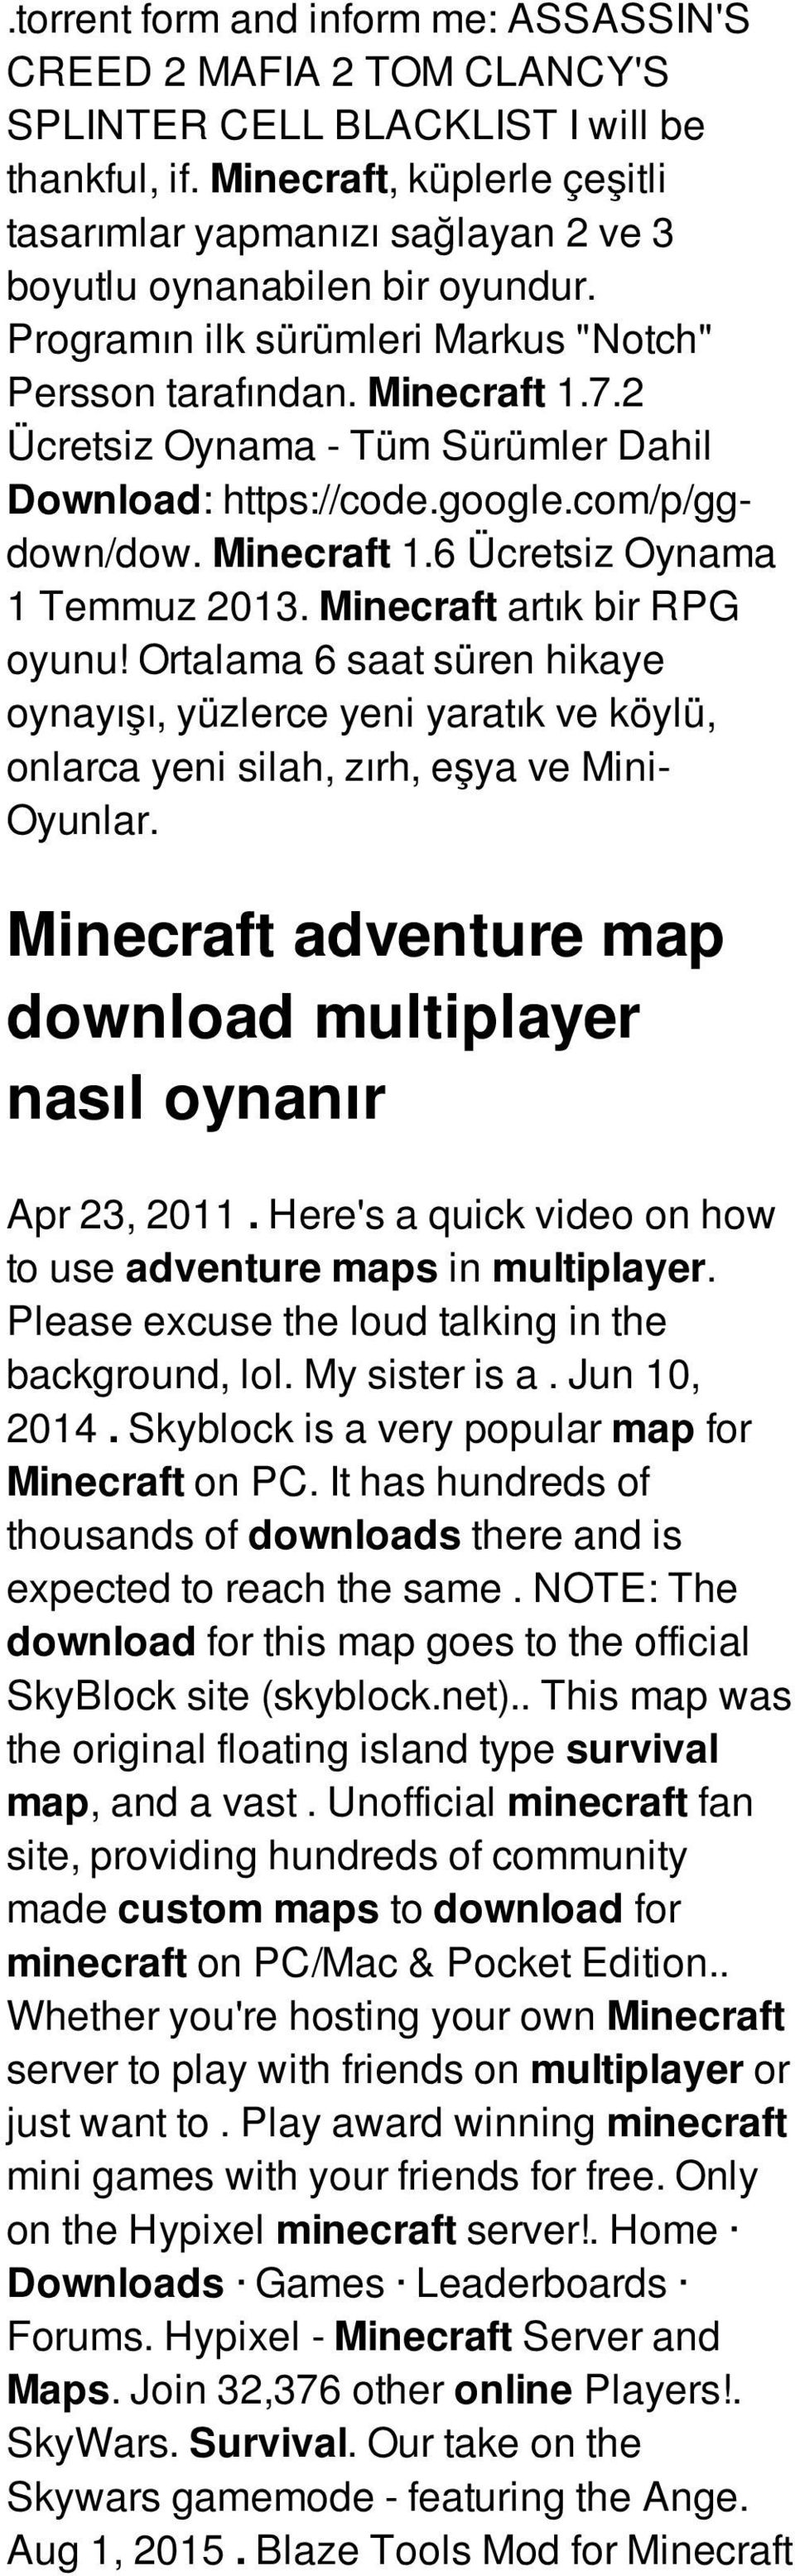 2 Ücretsiz Oynama - Tüm Sürümler Dahil Download: https://code.google.com/p/ggdown/dow. Minecraft 1.6 Ücretsiz Oynama 1 Temmuz 2013. Minecraft artık bir RPG oyunu!